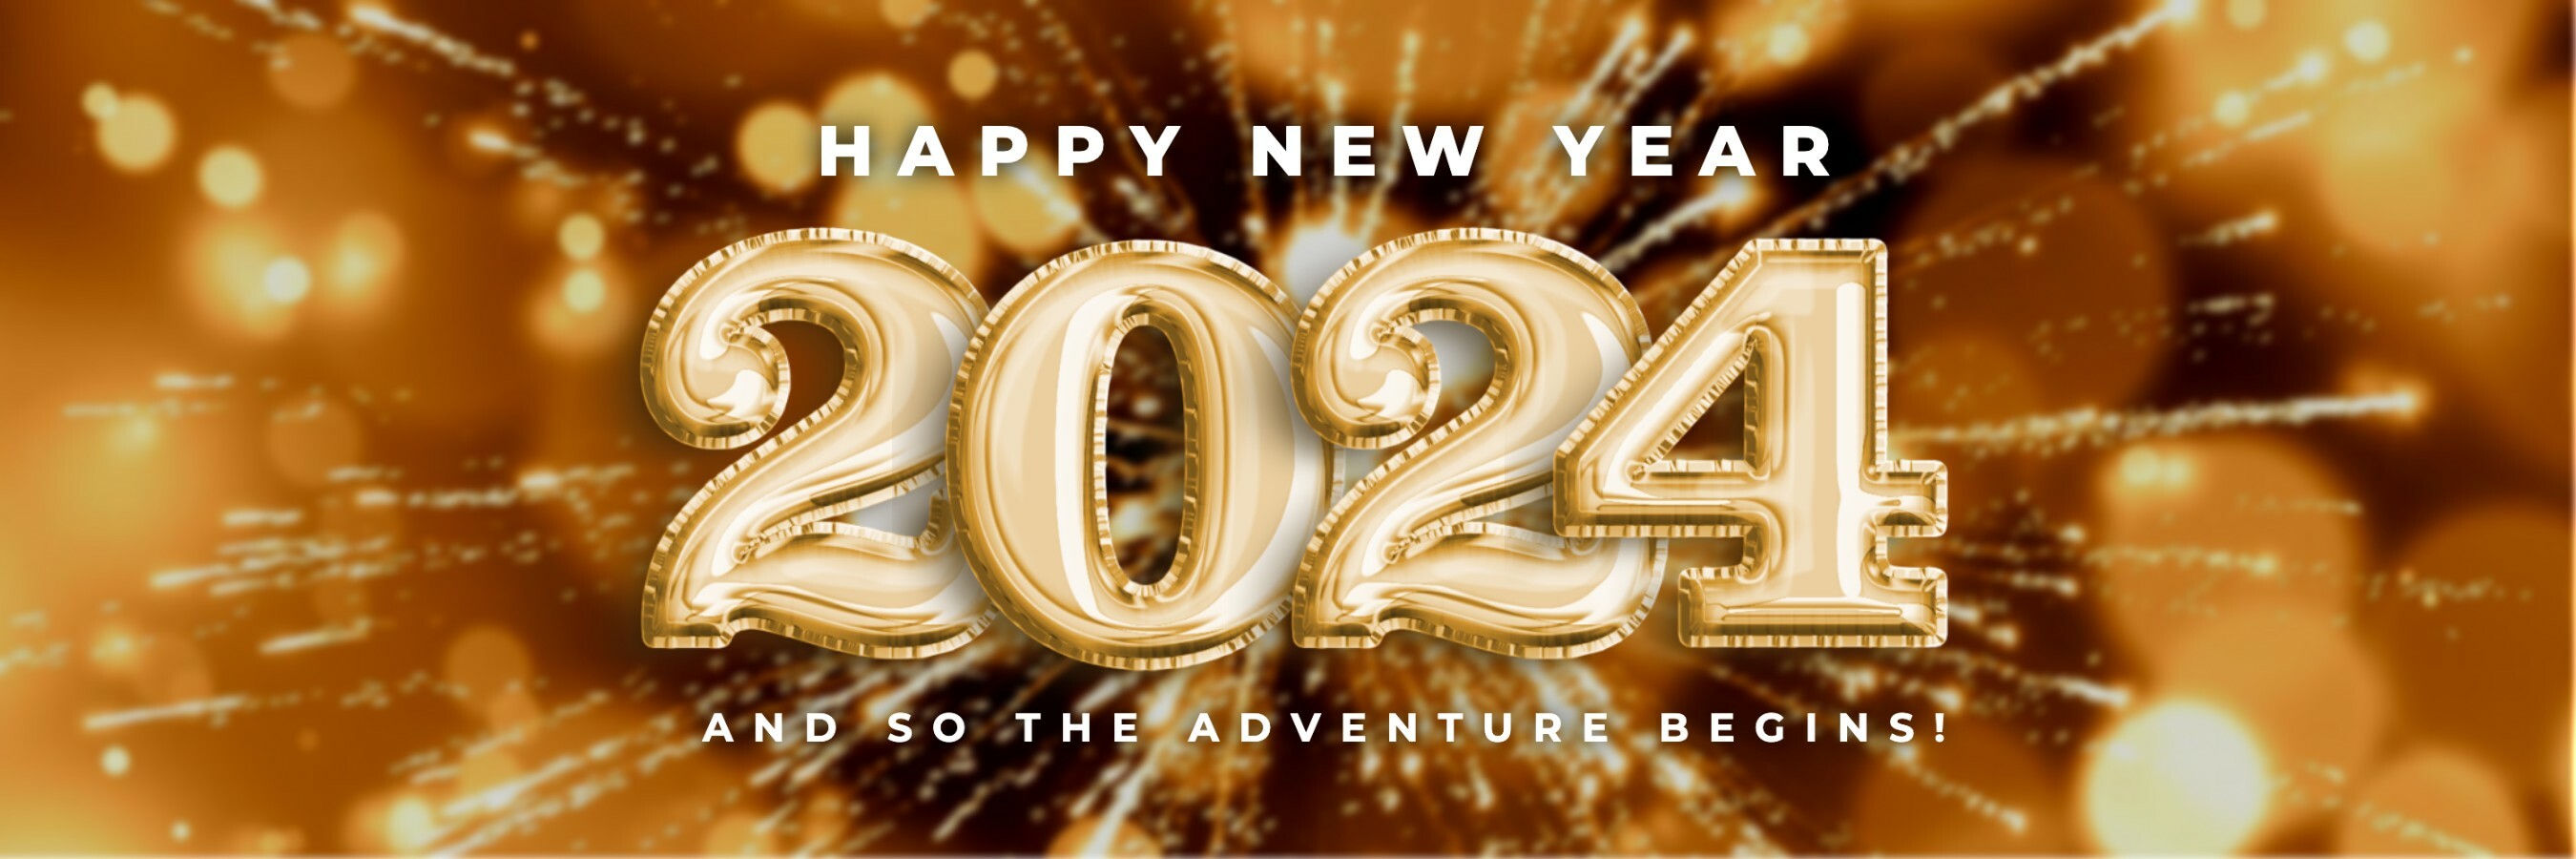 Gold Minimalist New Year Greeting Twitter Banner